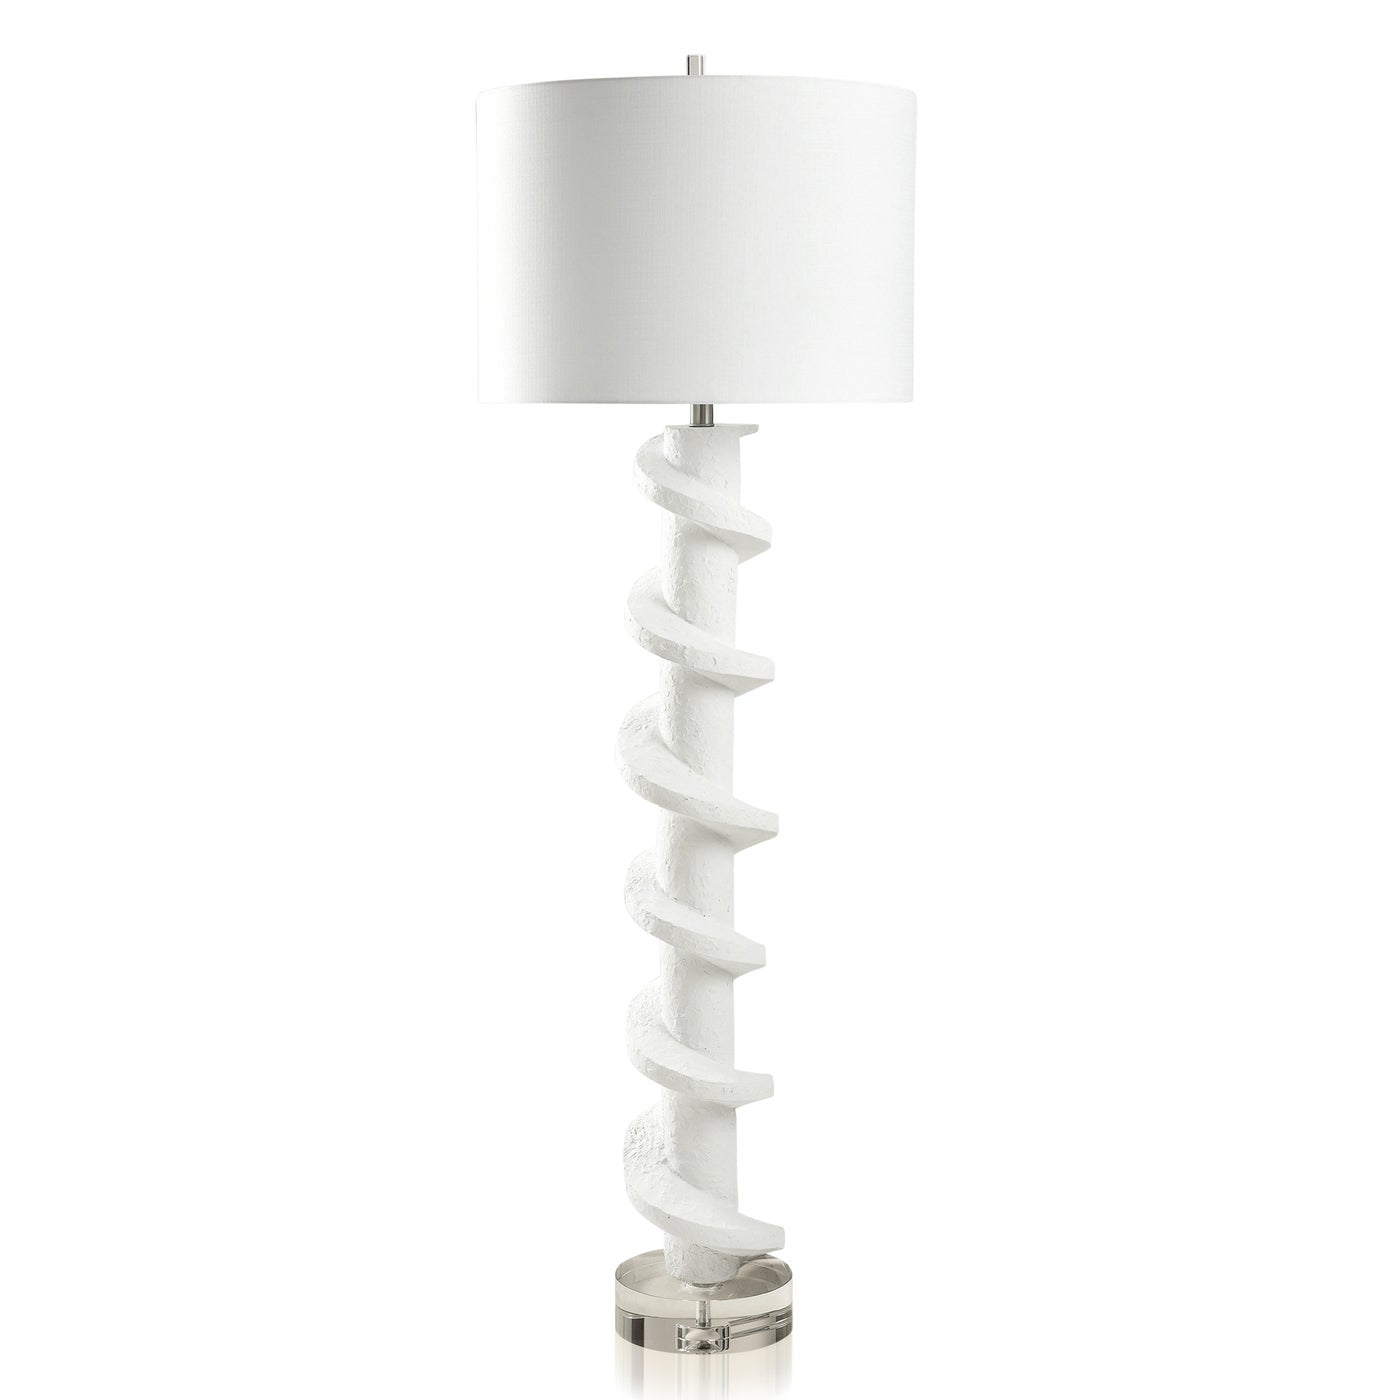 RUDNICK FLOOR LAMP | White Plaster Finish on Resin Body with Crystal Base | Hardback Shade